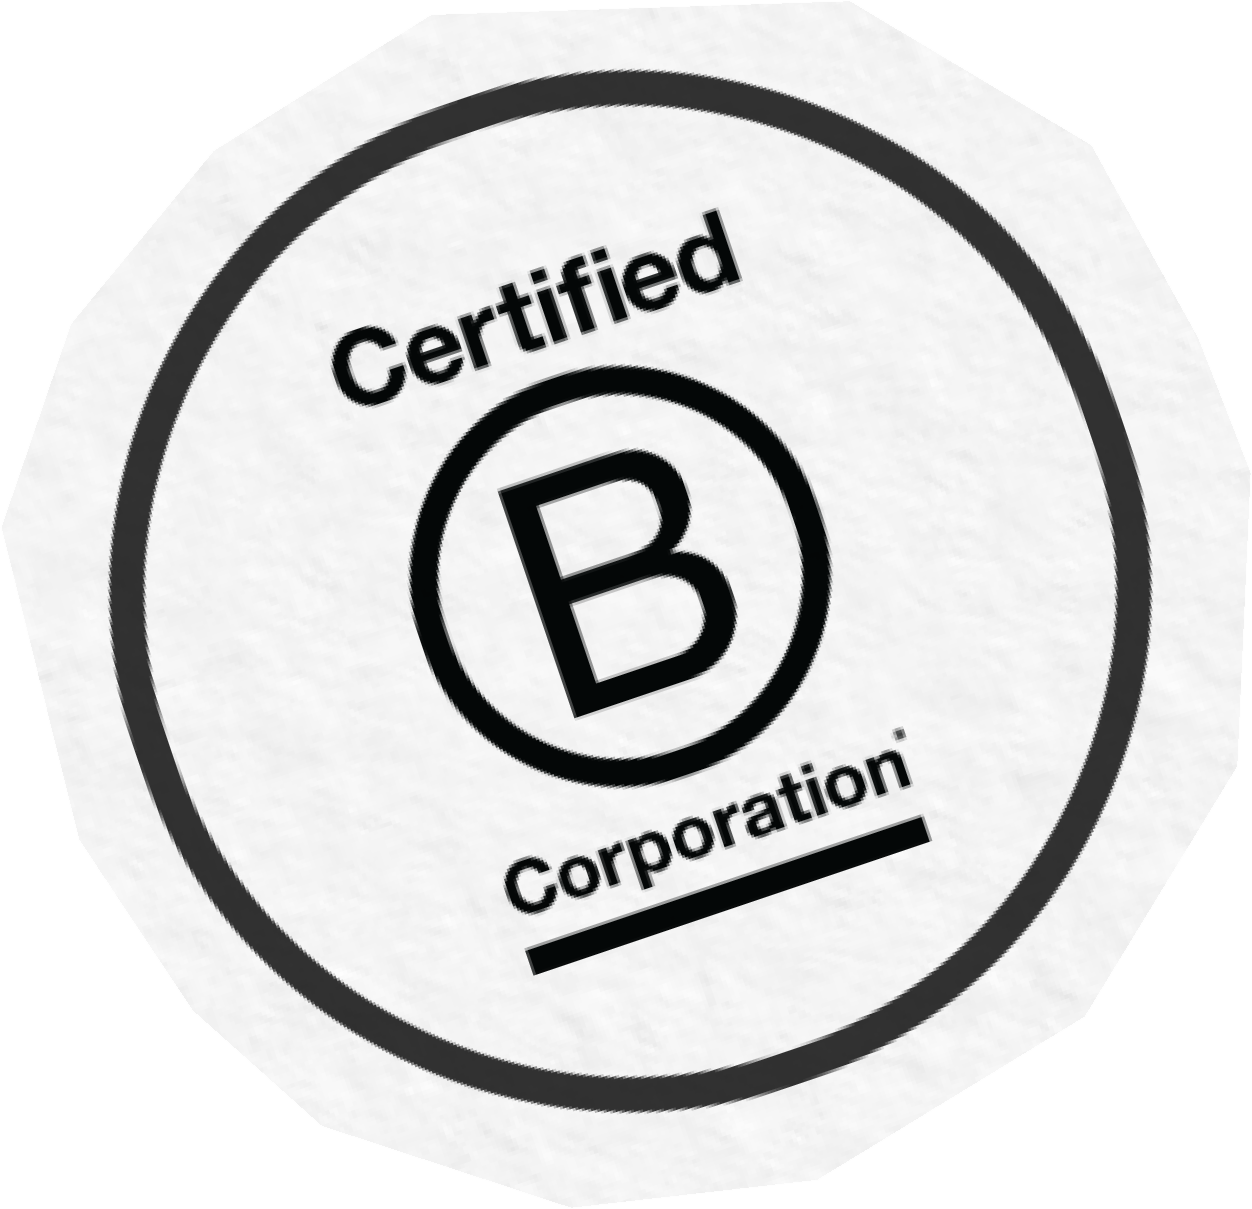 B-corporation logo